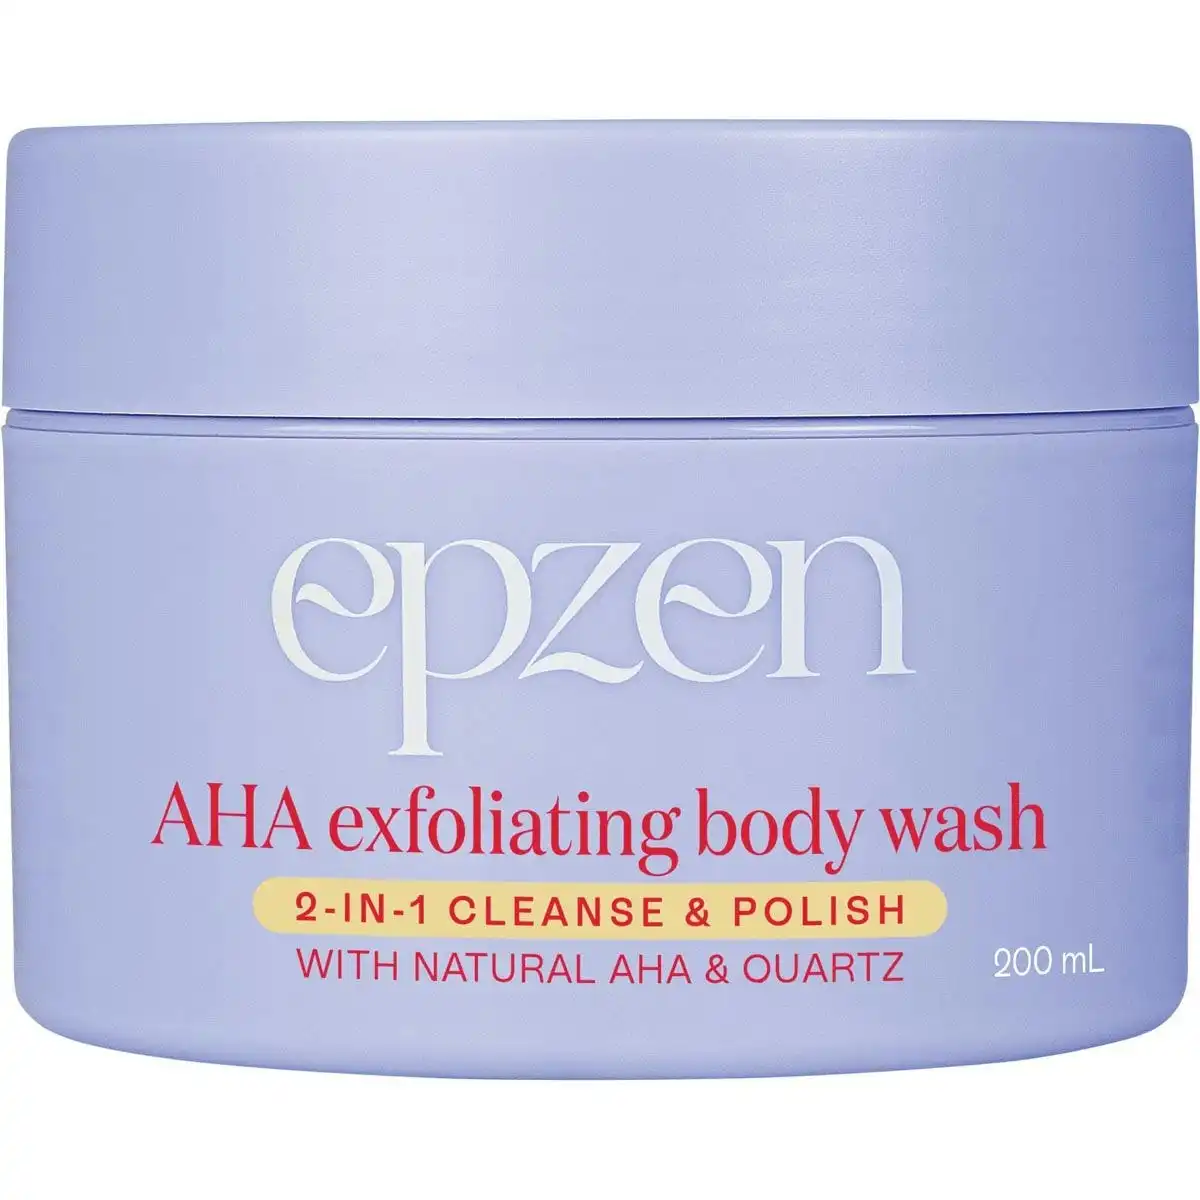 EpZen AHA Exfoliating Body Wash 2-in-1 Cleanse & Polish 200ml